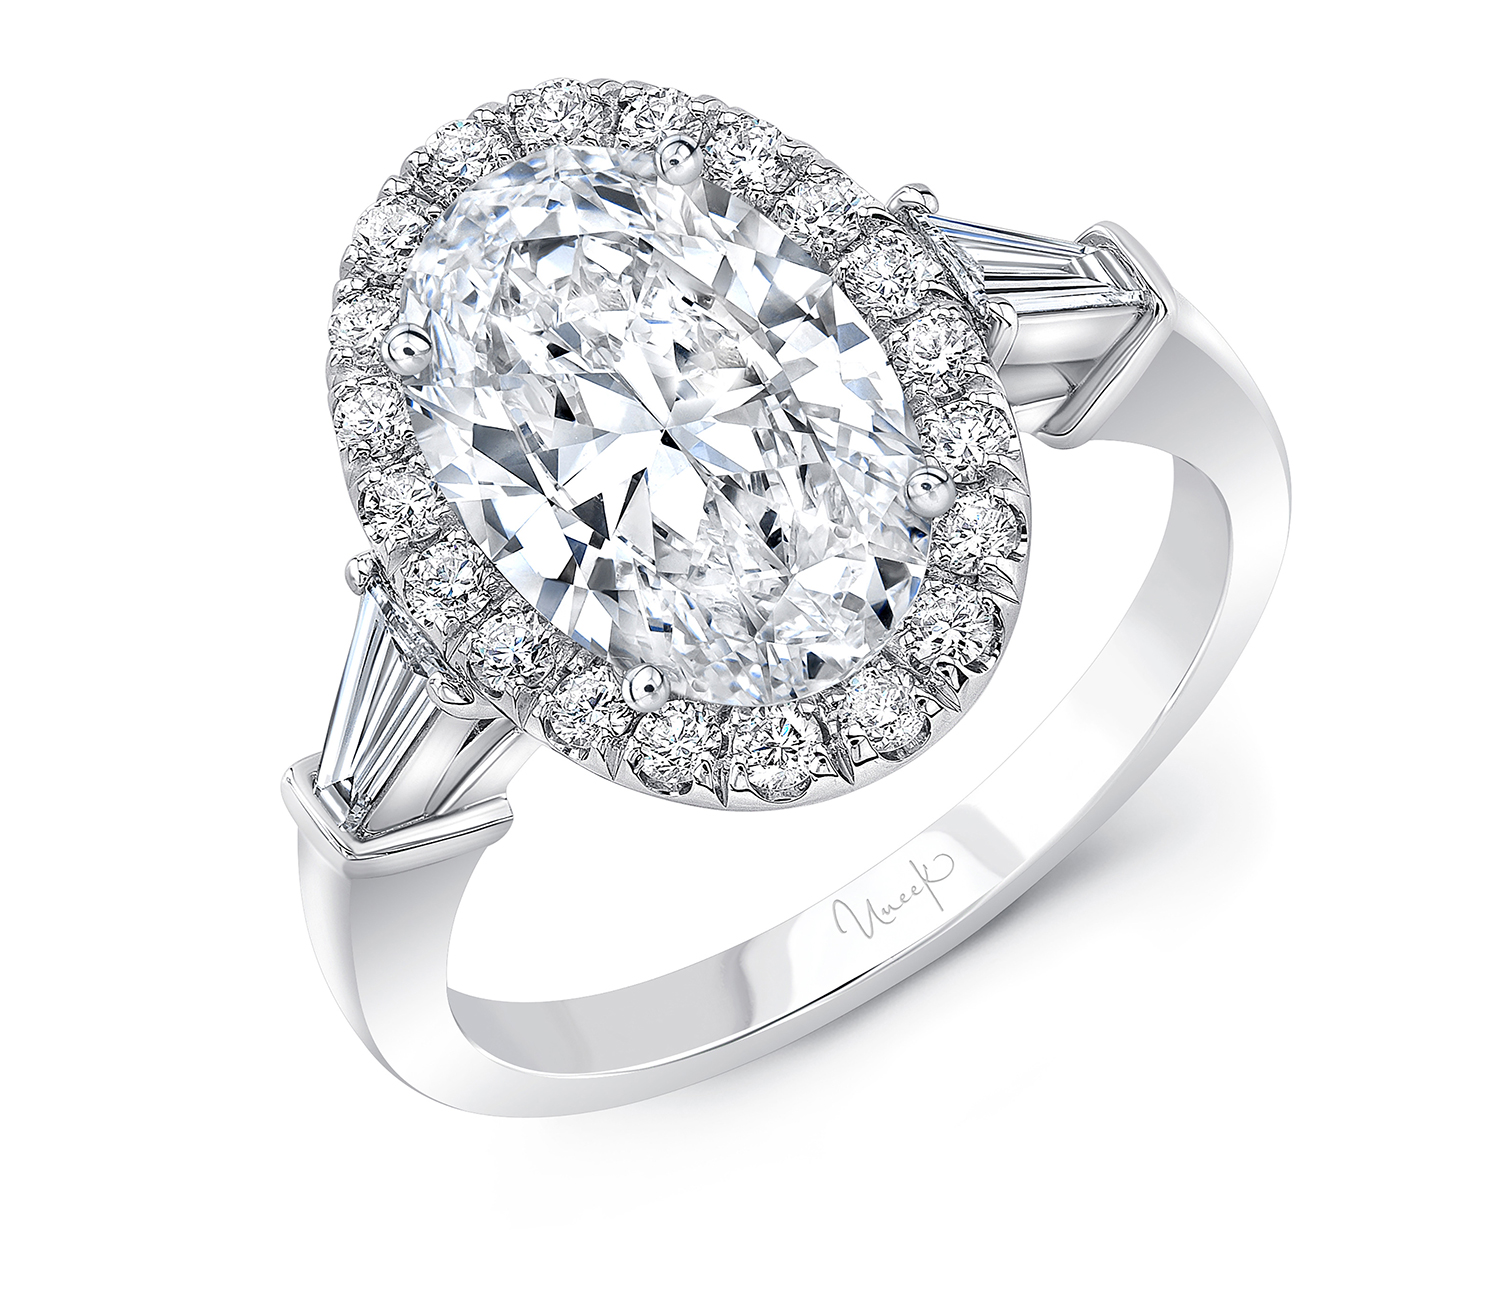 INSTORE Design Awards 2021 &#8211; Best Engagement/Wedding Jewelry Over $5,000